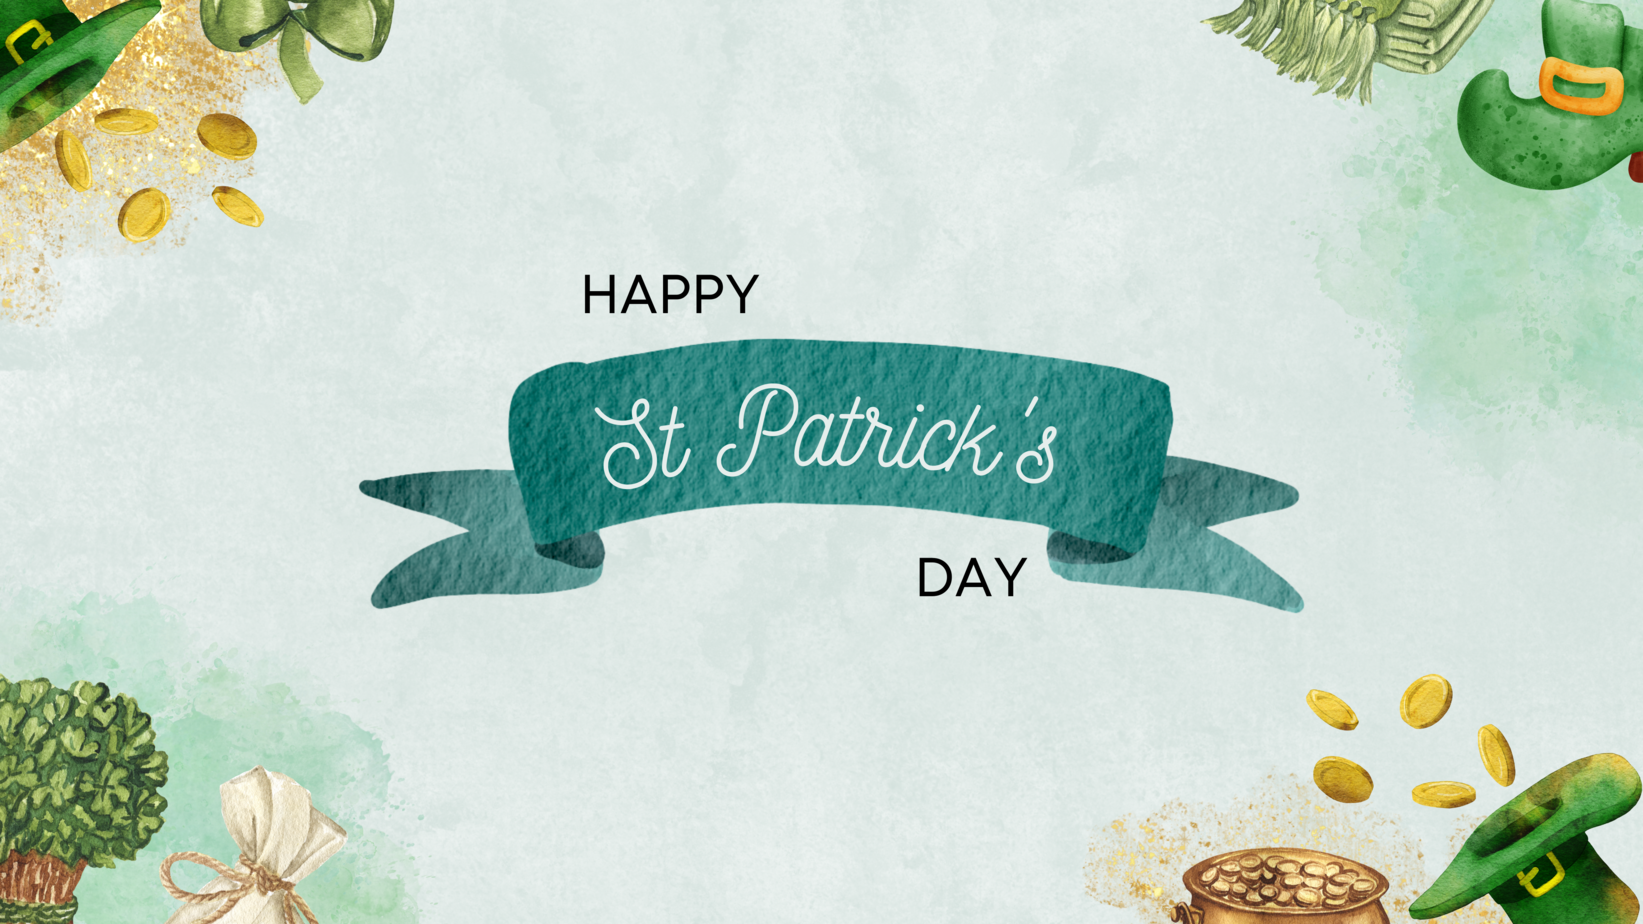 Enjoy some St Patrick's day music! Happy St Patrick's day 2022